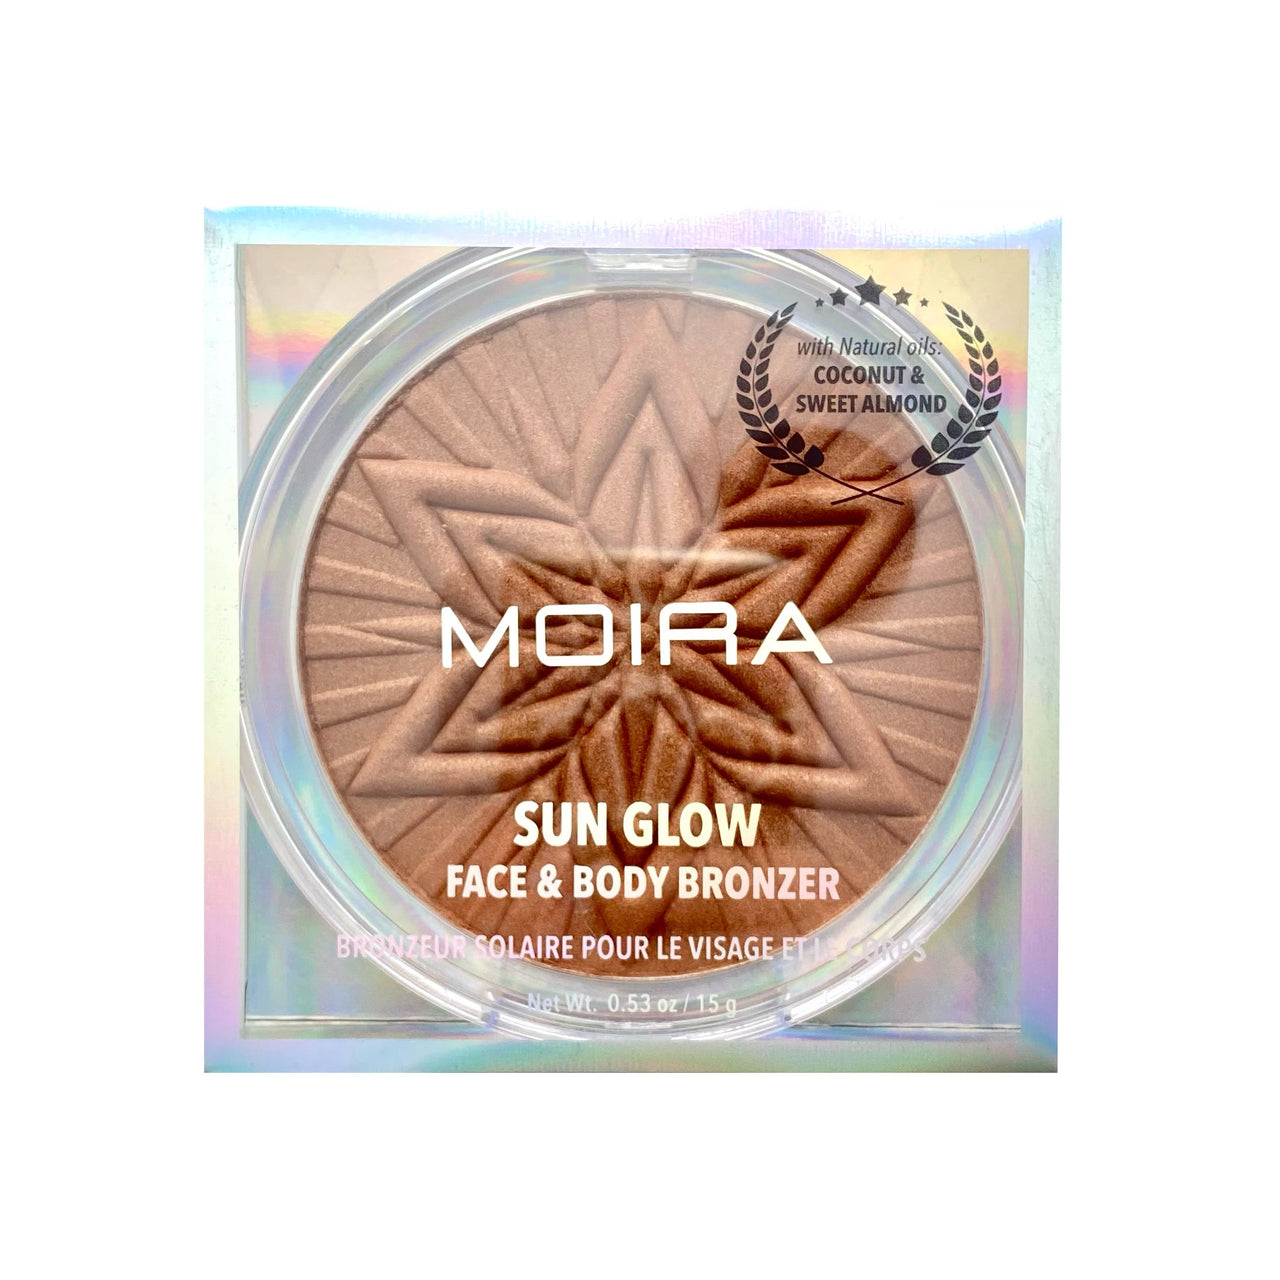 MOIRA Sun Glow Face & Body Bronzer